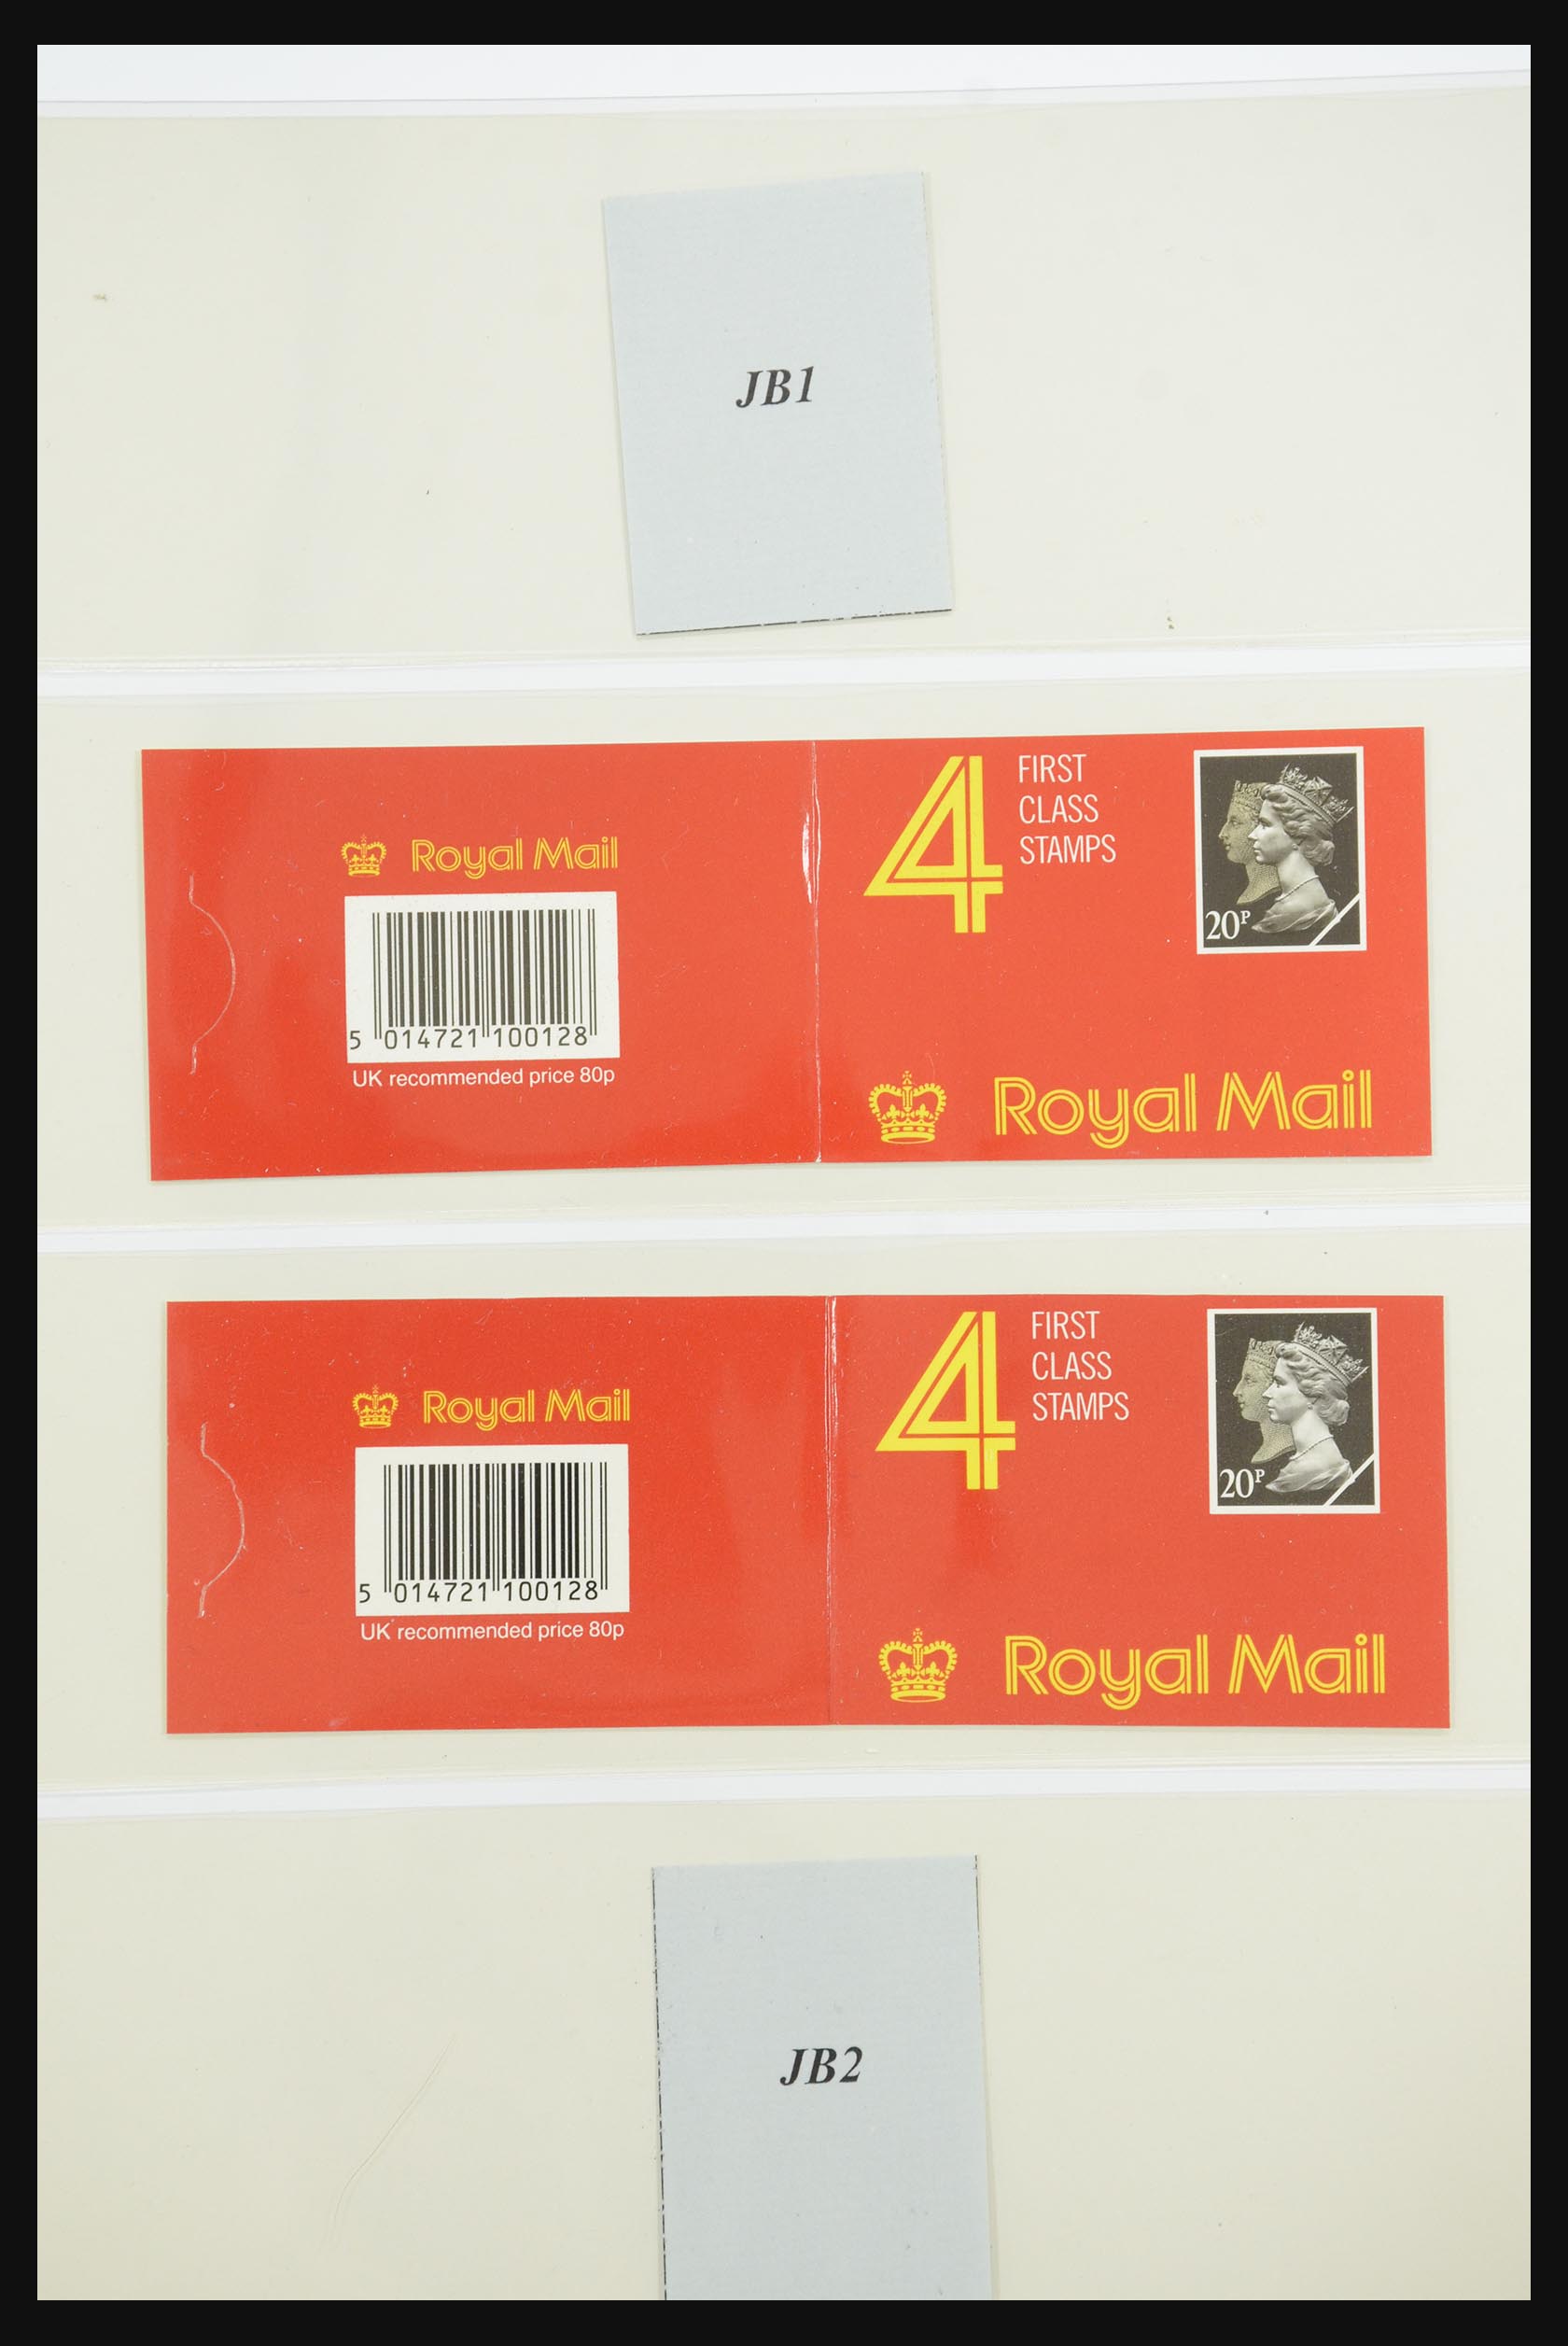 31960 181 - 31960 Great Britain stampbooklets 1989-2000.